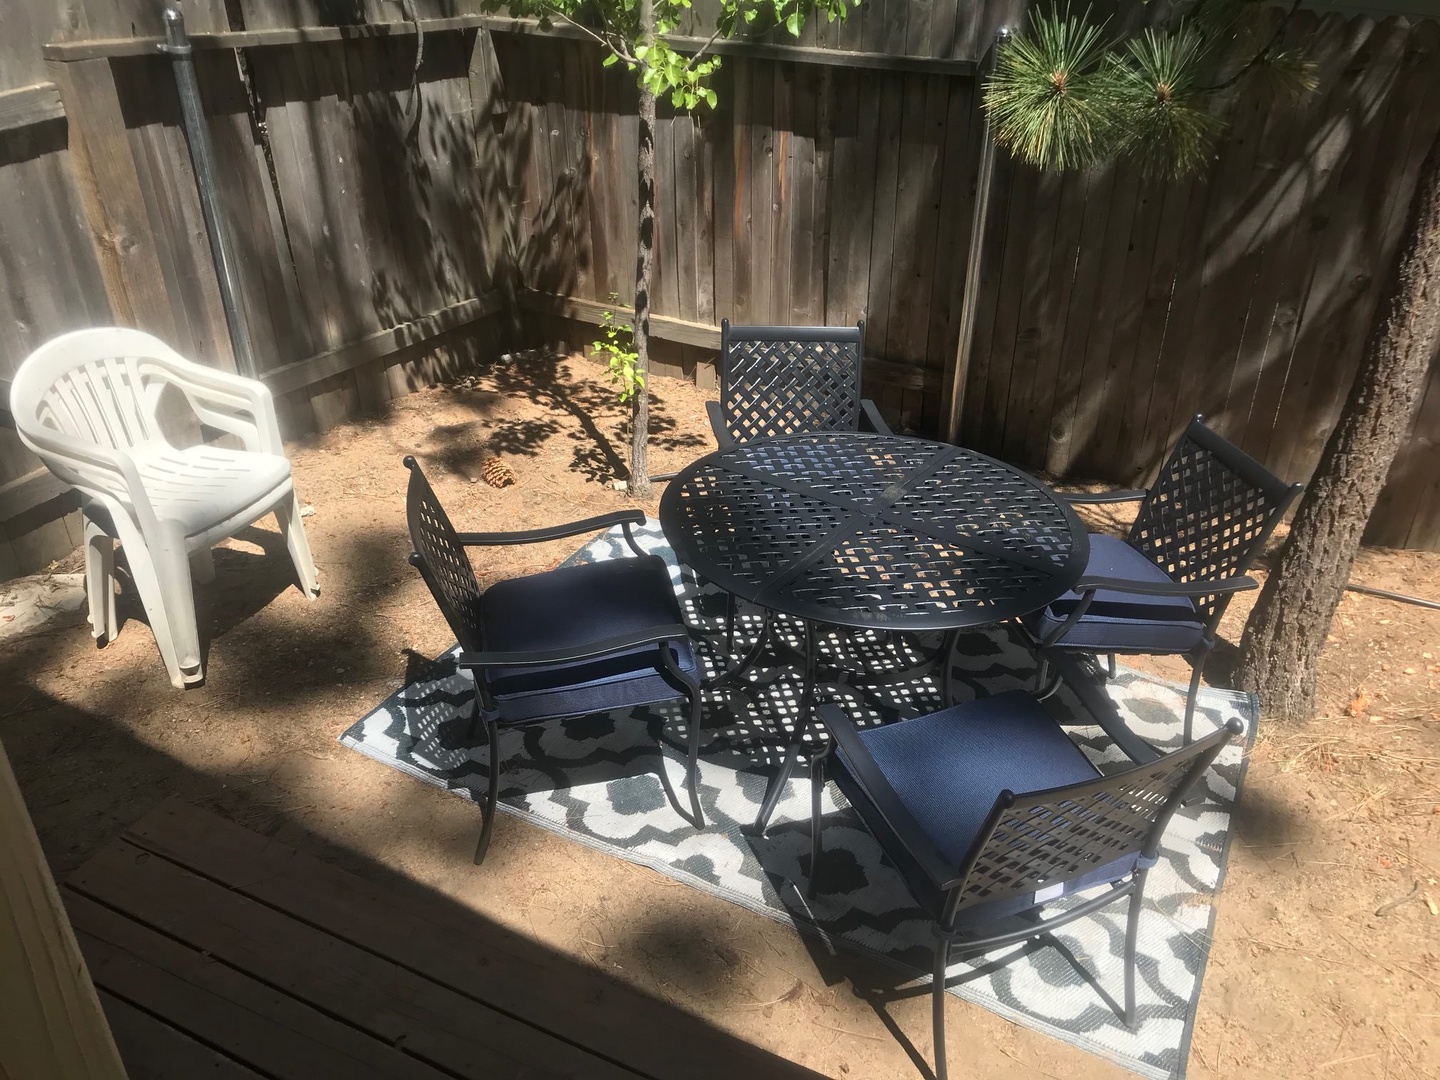 New patio furniture